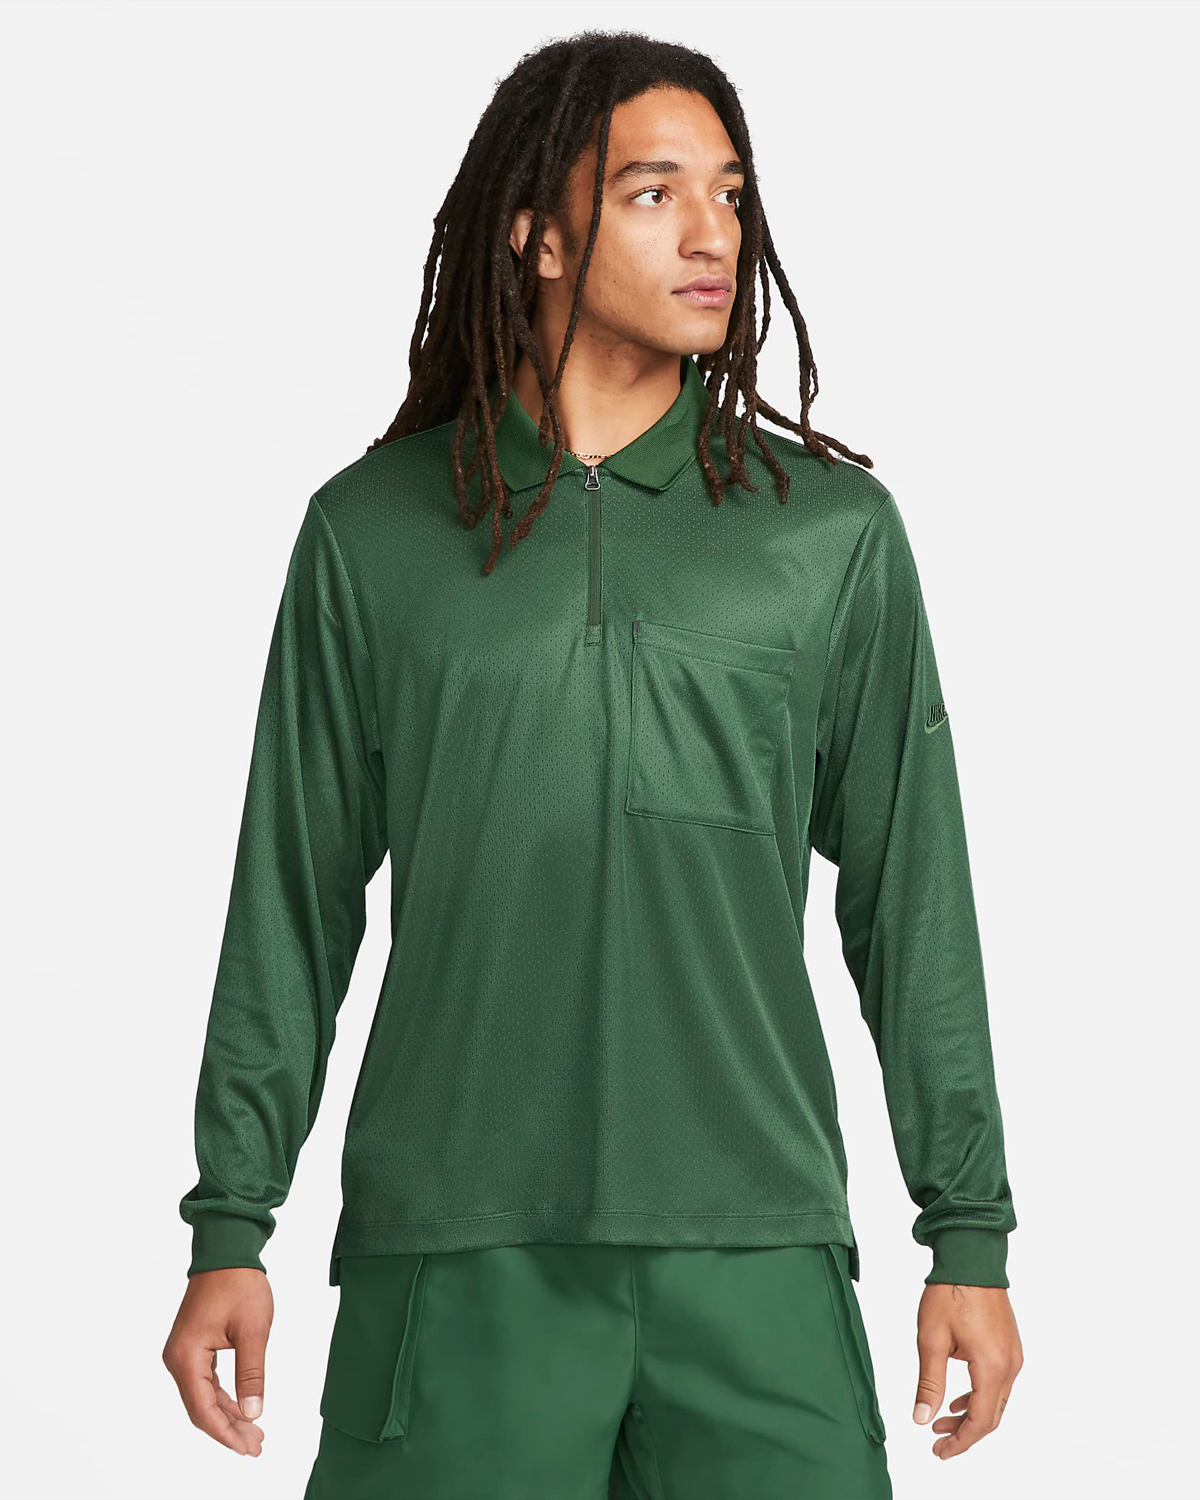 Nike-Sportswear-Tech-Pack-Long-Sleeve-Top-Fir-Green